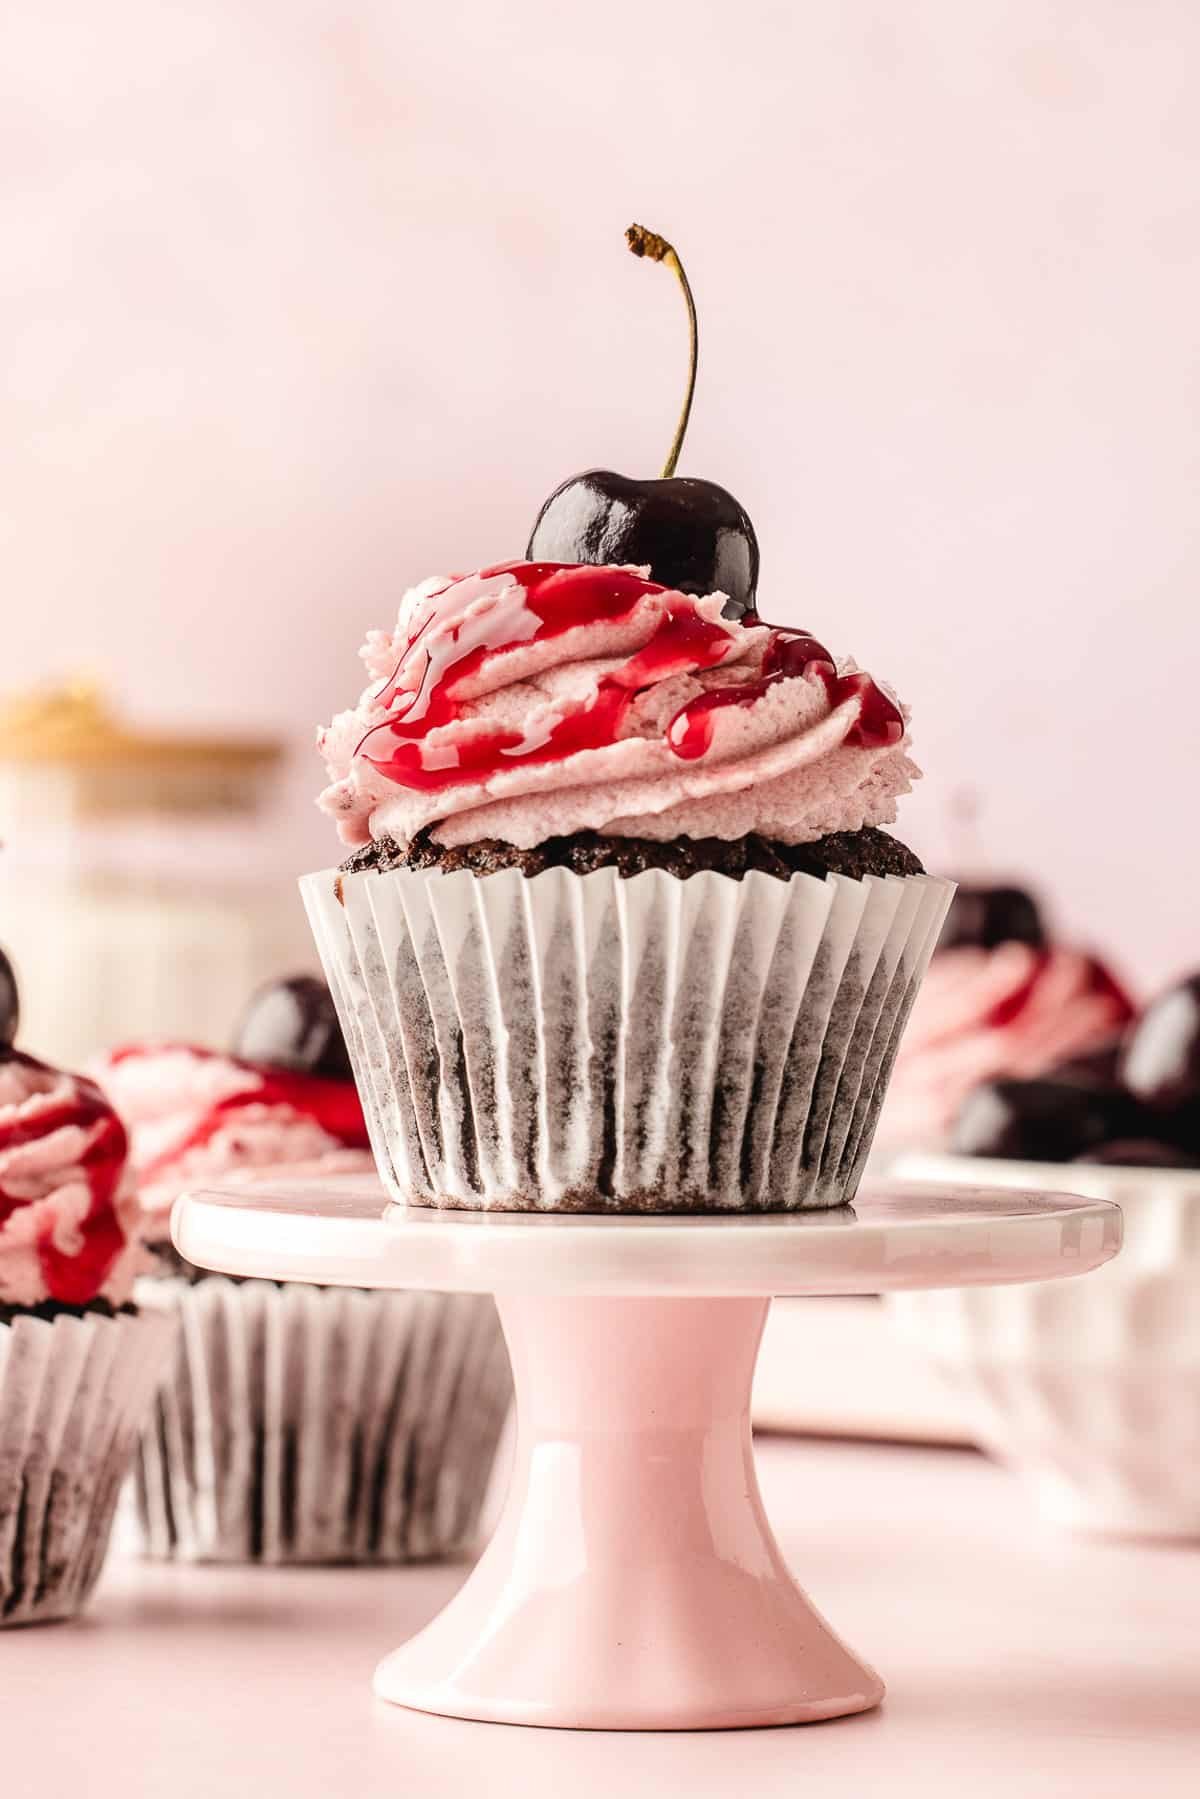 A chocolate cherry cupcake on a pedestal.